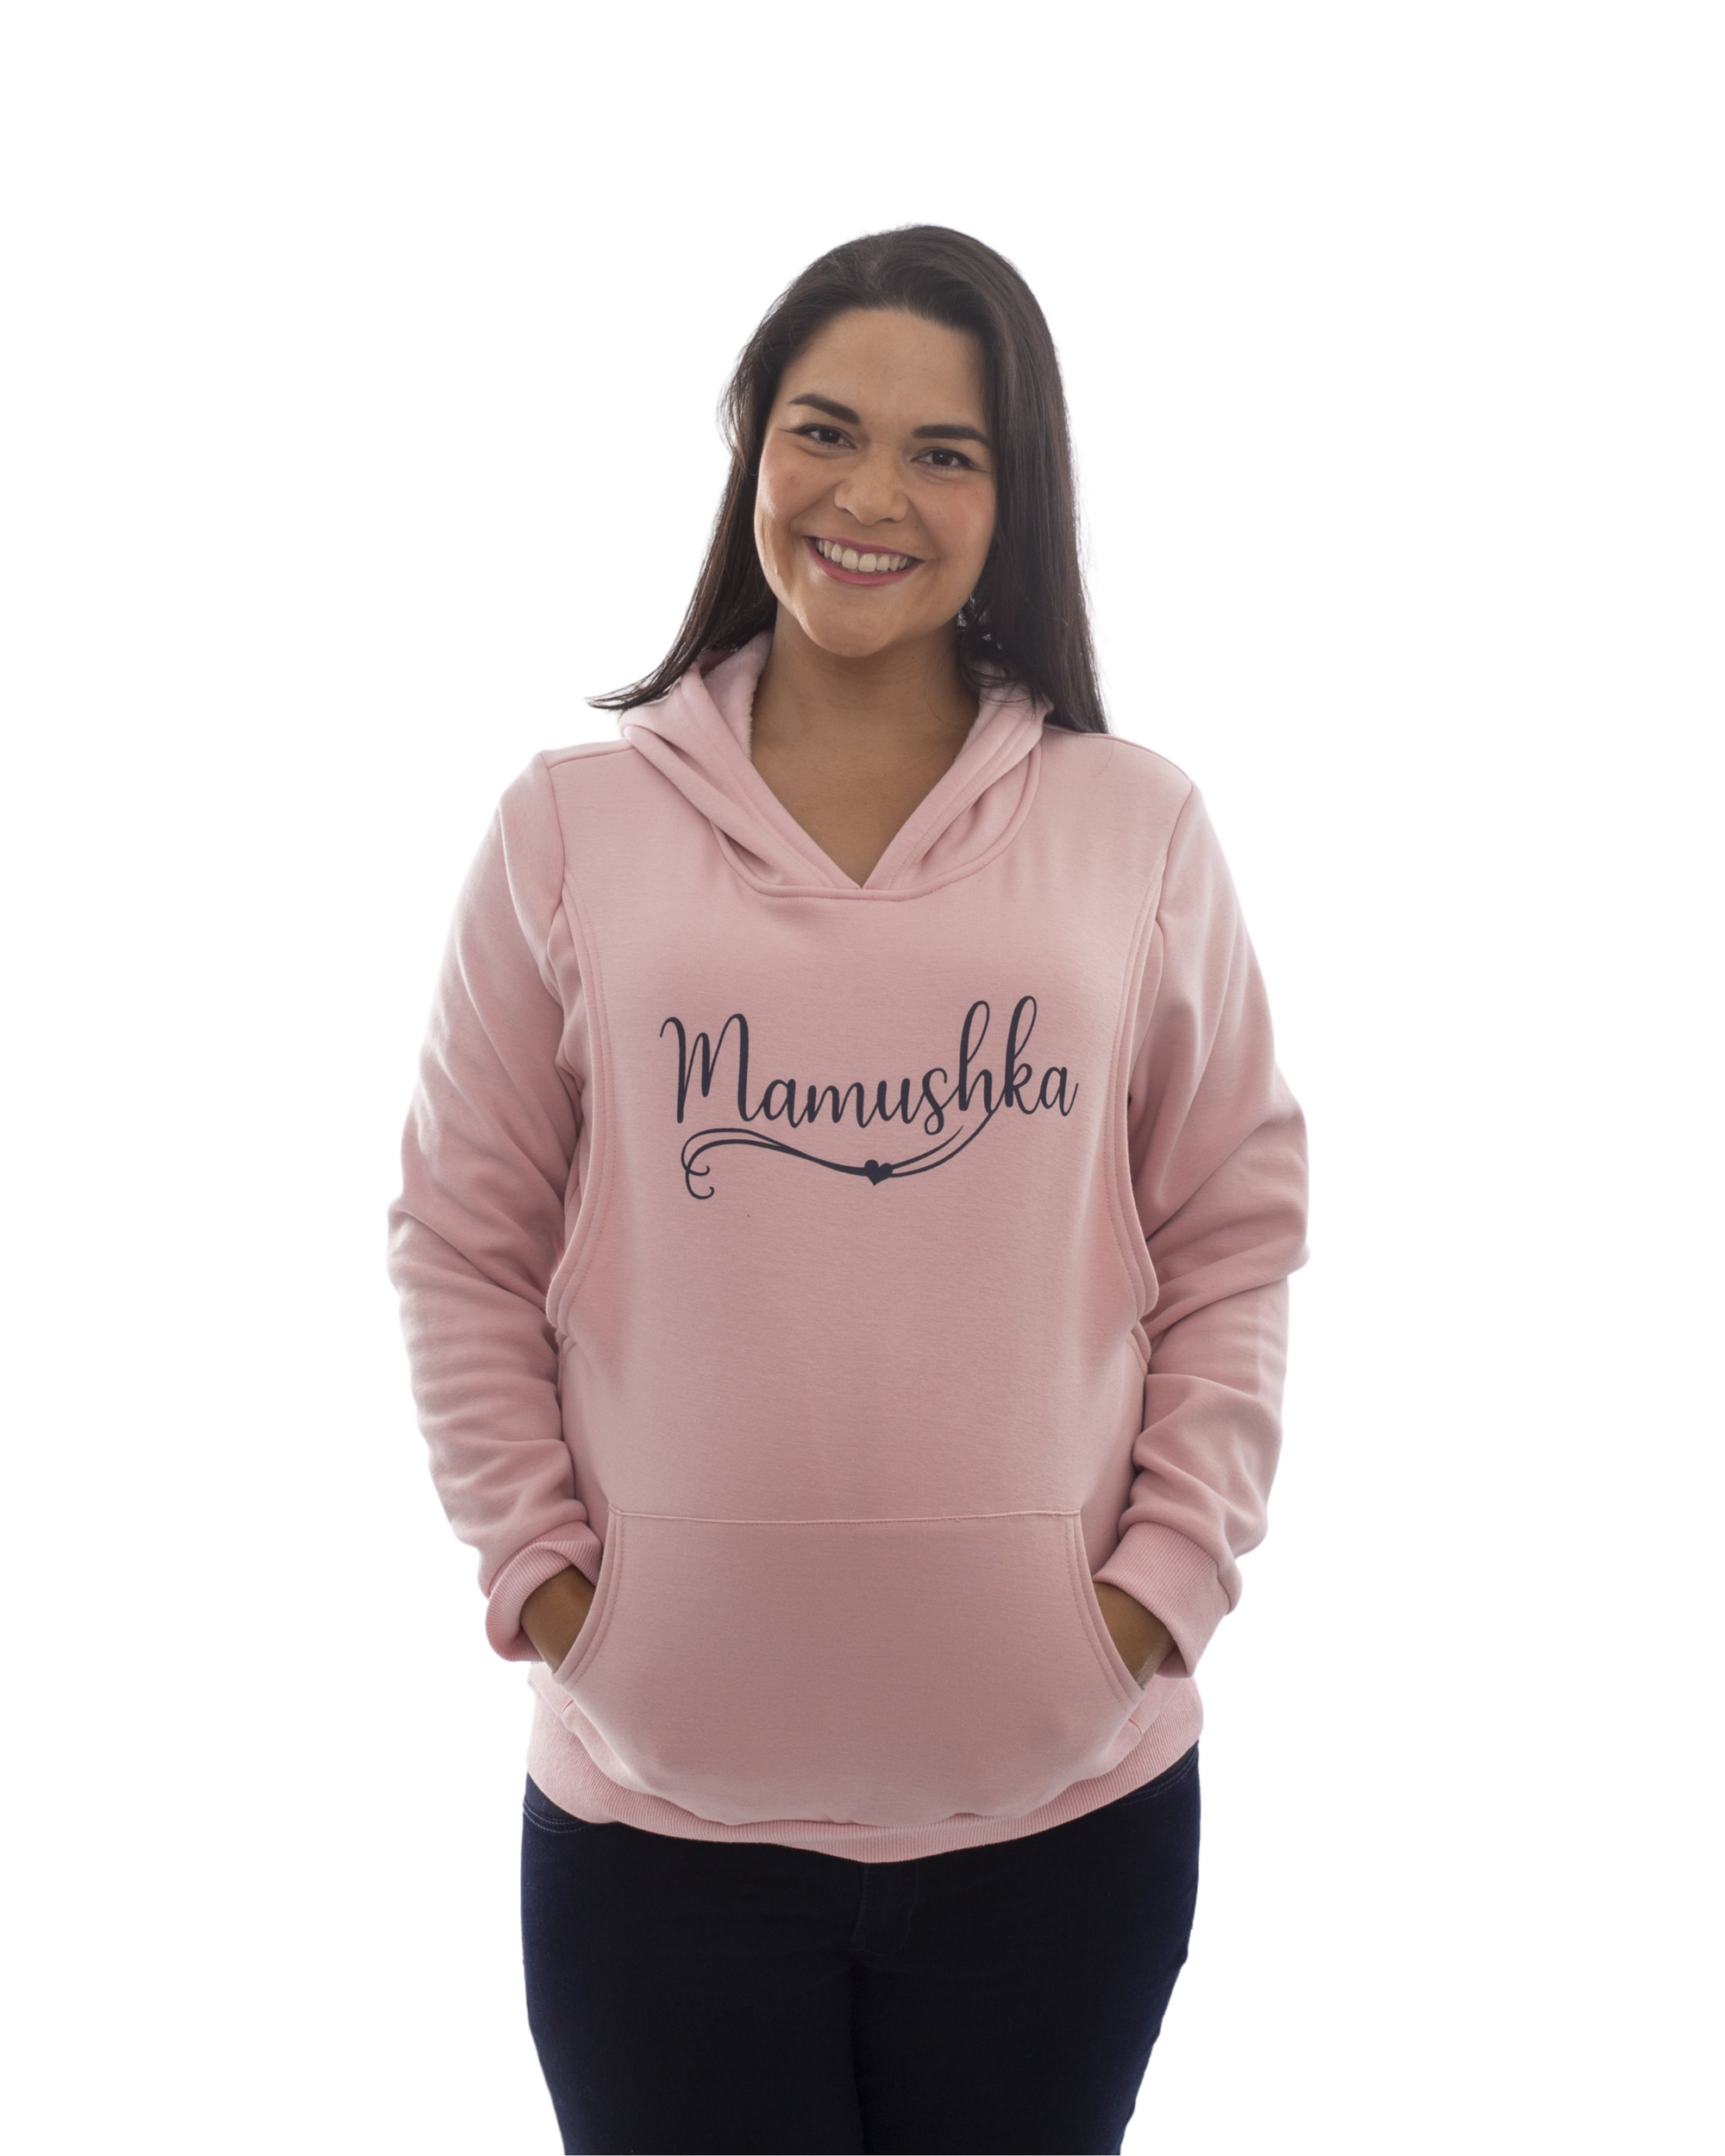 Mamushka Fleece Lined Maternity & Nursing Hoodie - Rose Gold / Navy Print